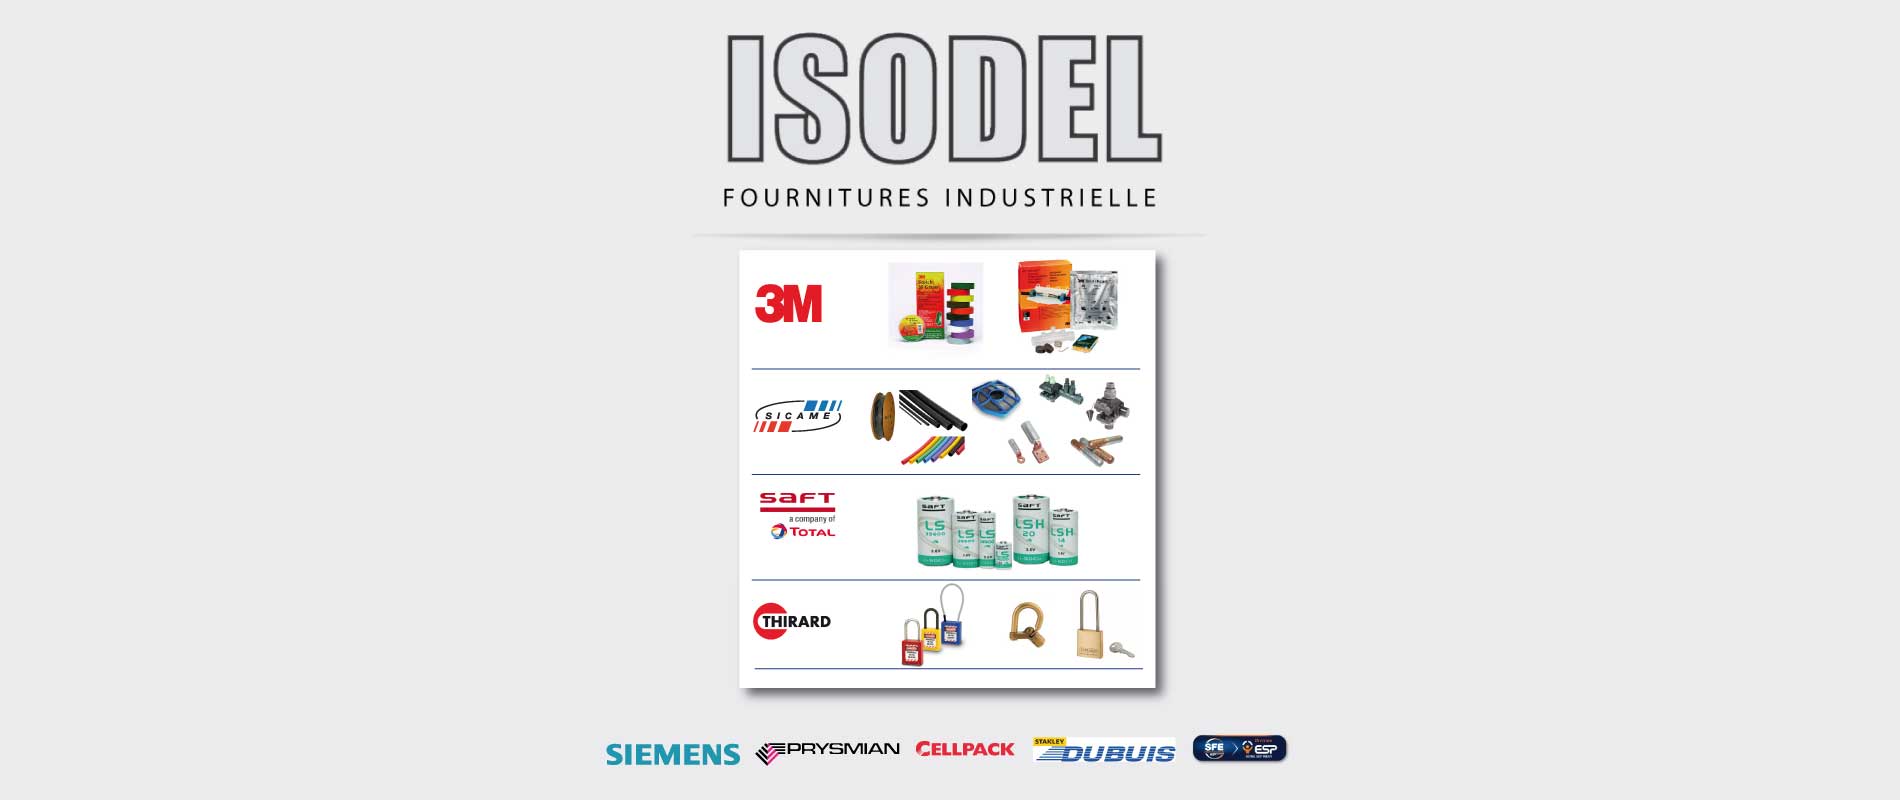 ISODEL, fournitures industrielle Maroc